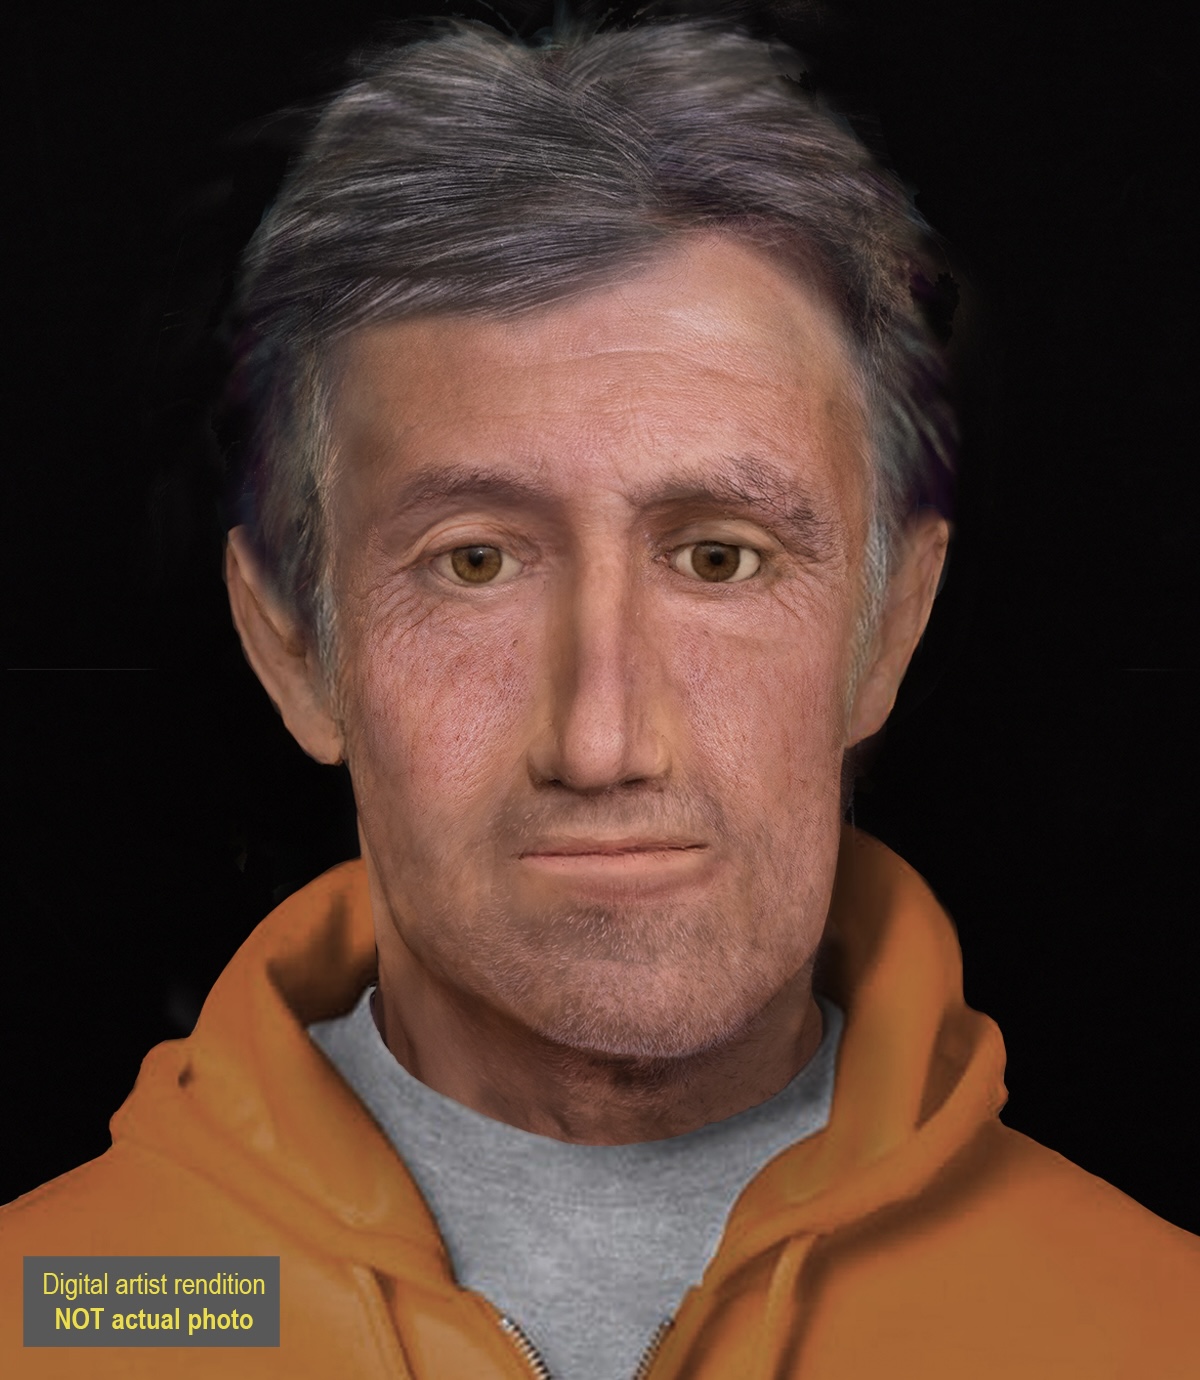 Edmonton John Doe - Unidentified Human Remains Canada